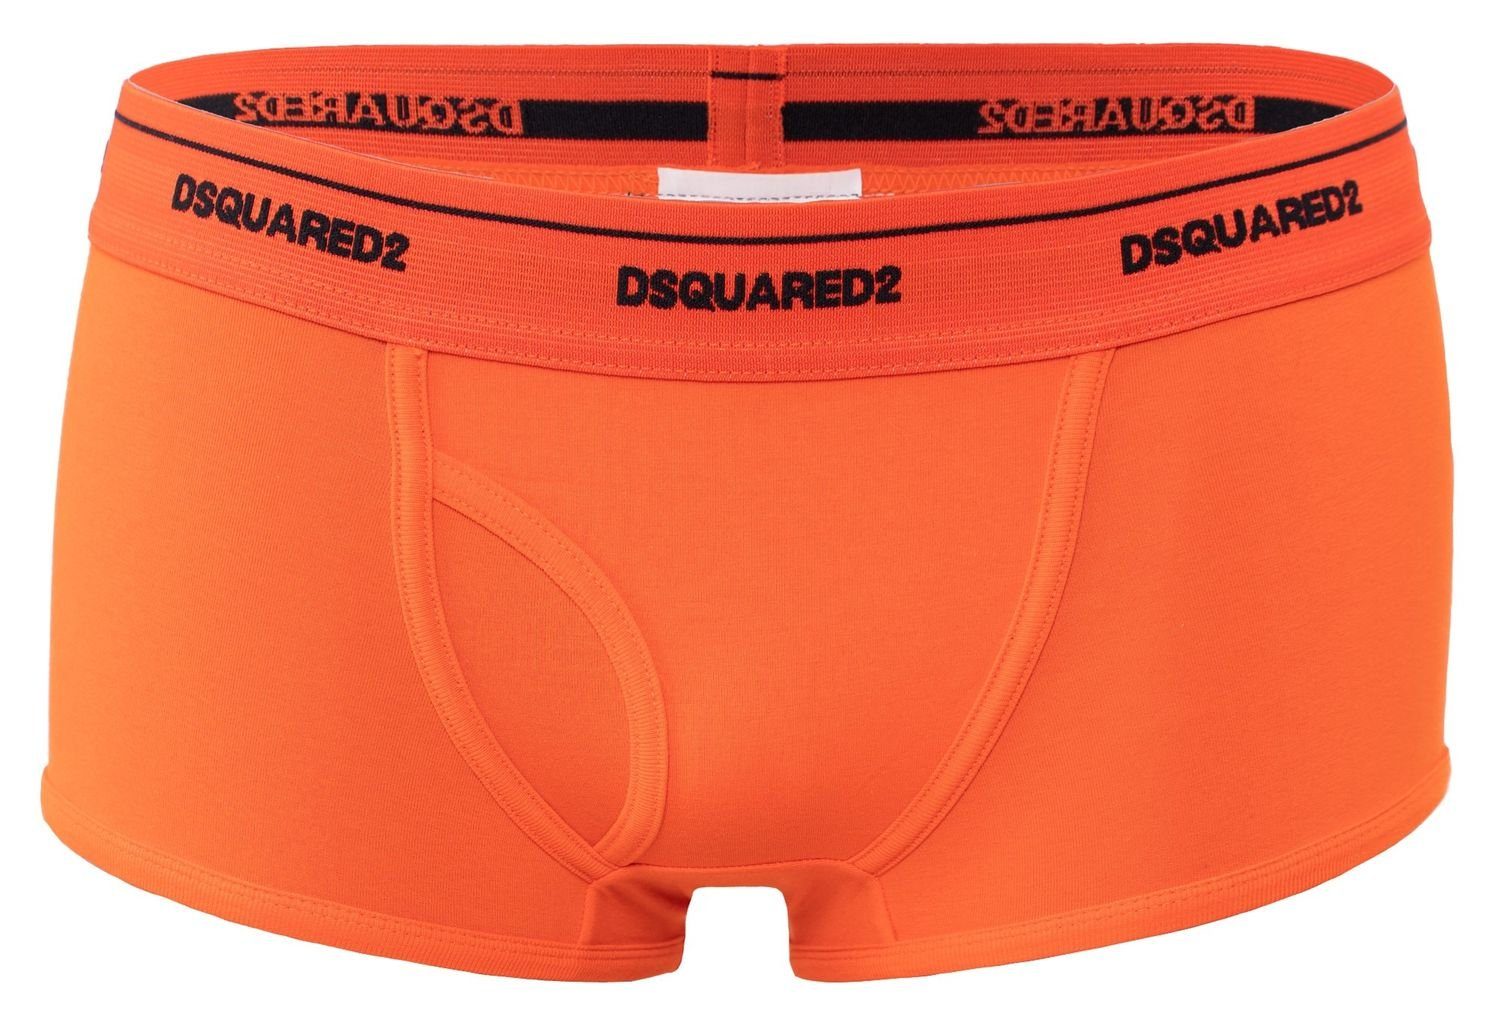 Dsquared2 Trunk Dsquared2 Boxershorts / Pants / Shorts / Boxer in rot Größe S / M / L / XL / XXL (1-St)